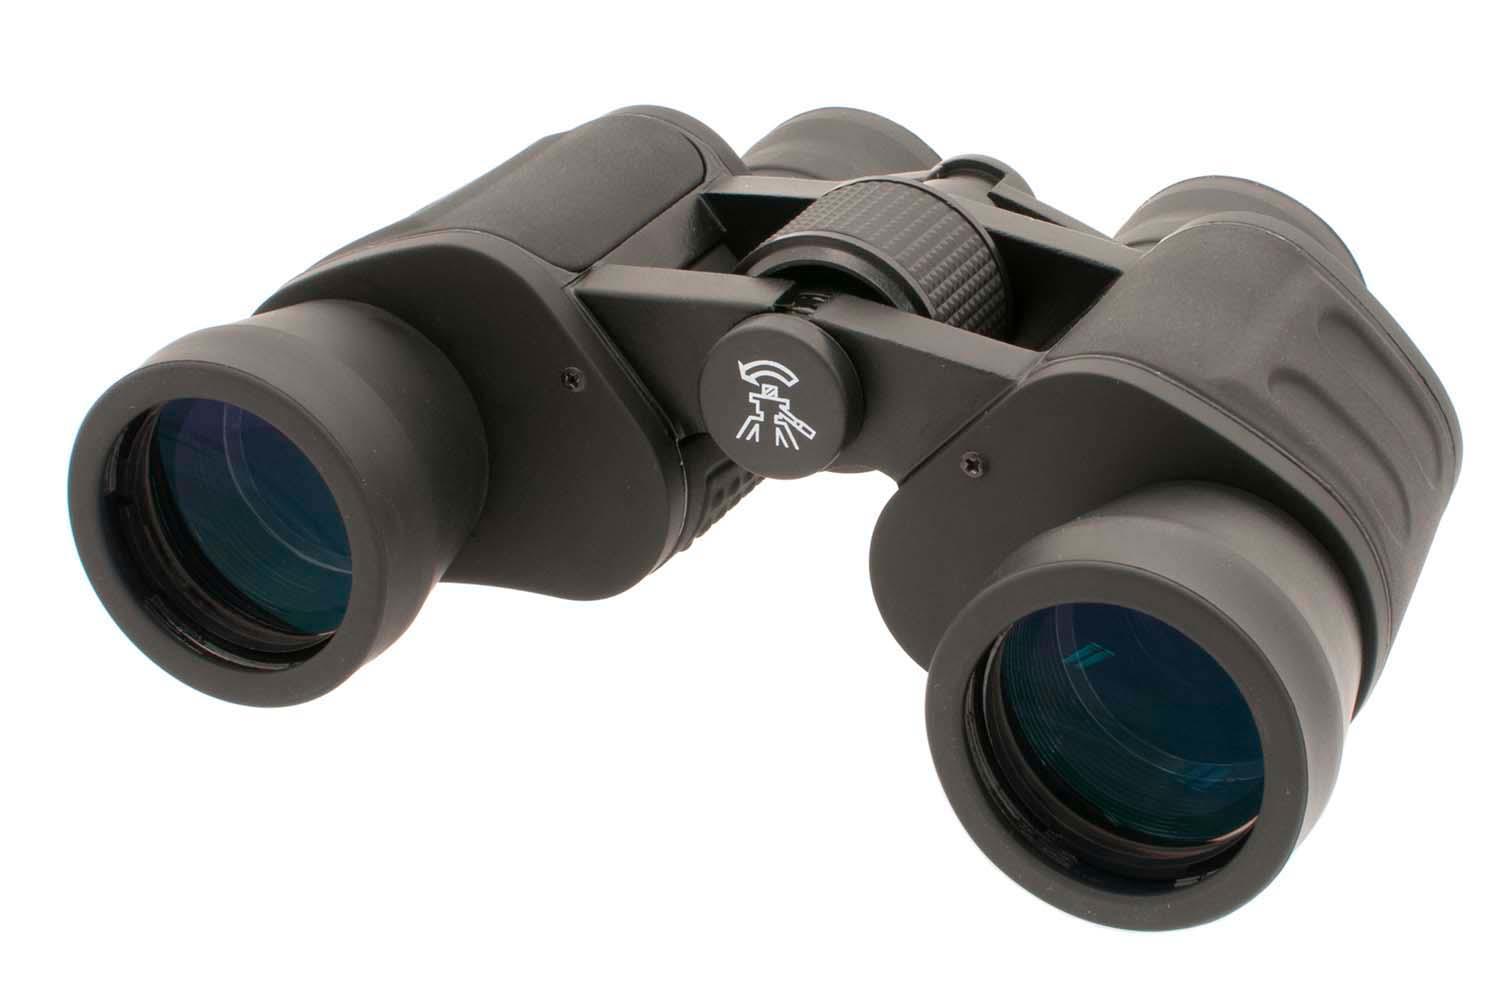   TS-Optics Optics LE 8x40 wide field Porro binoculars - multi coated - rubber armoured [EN]  